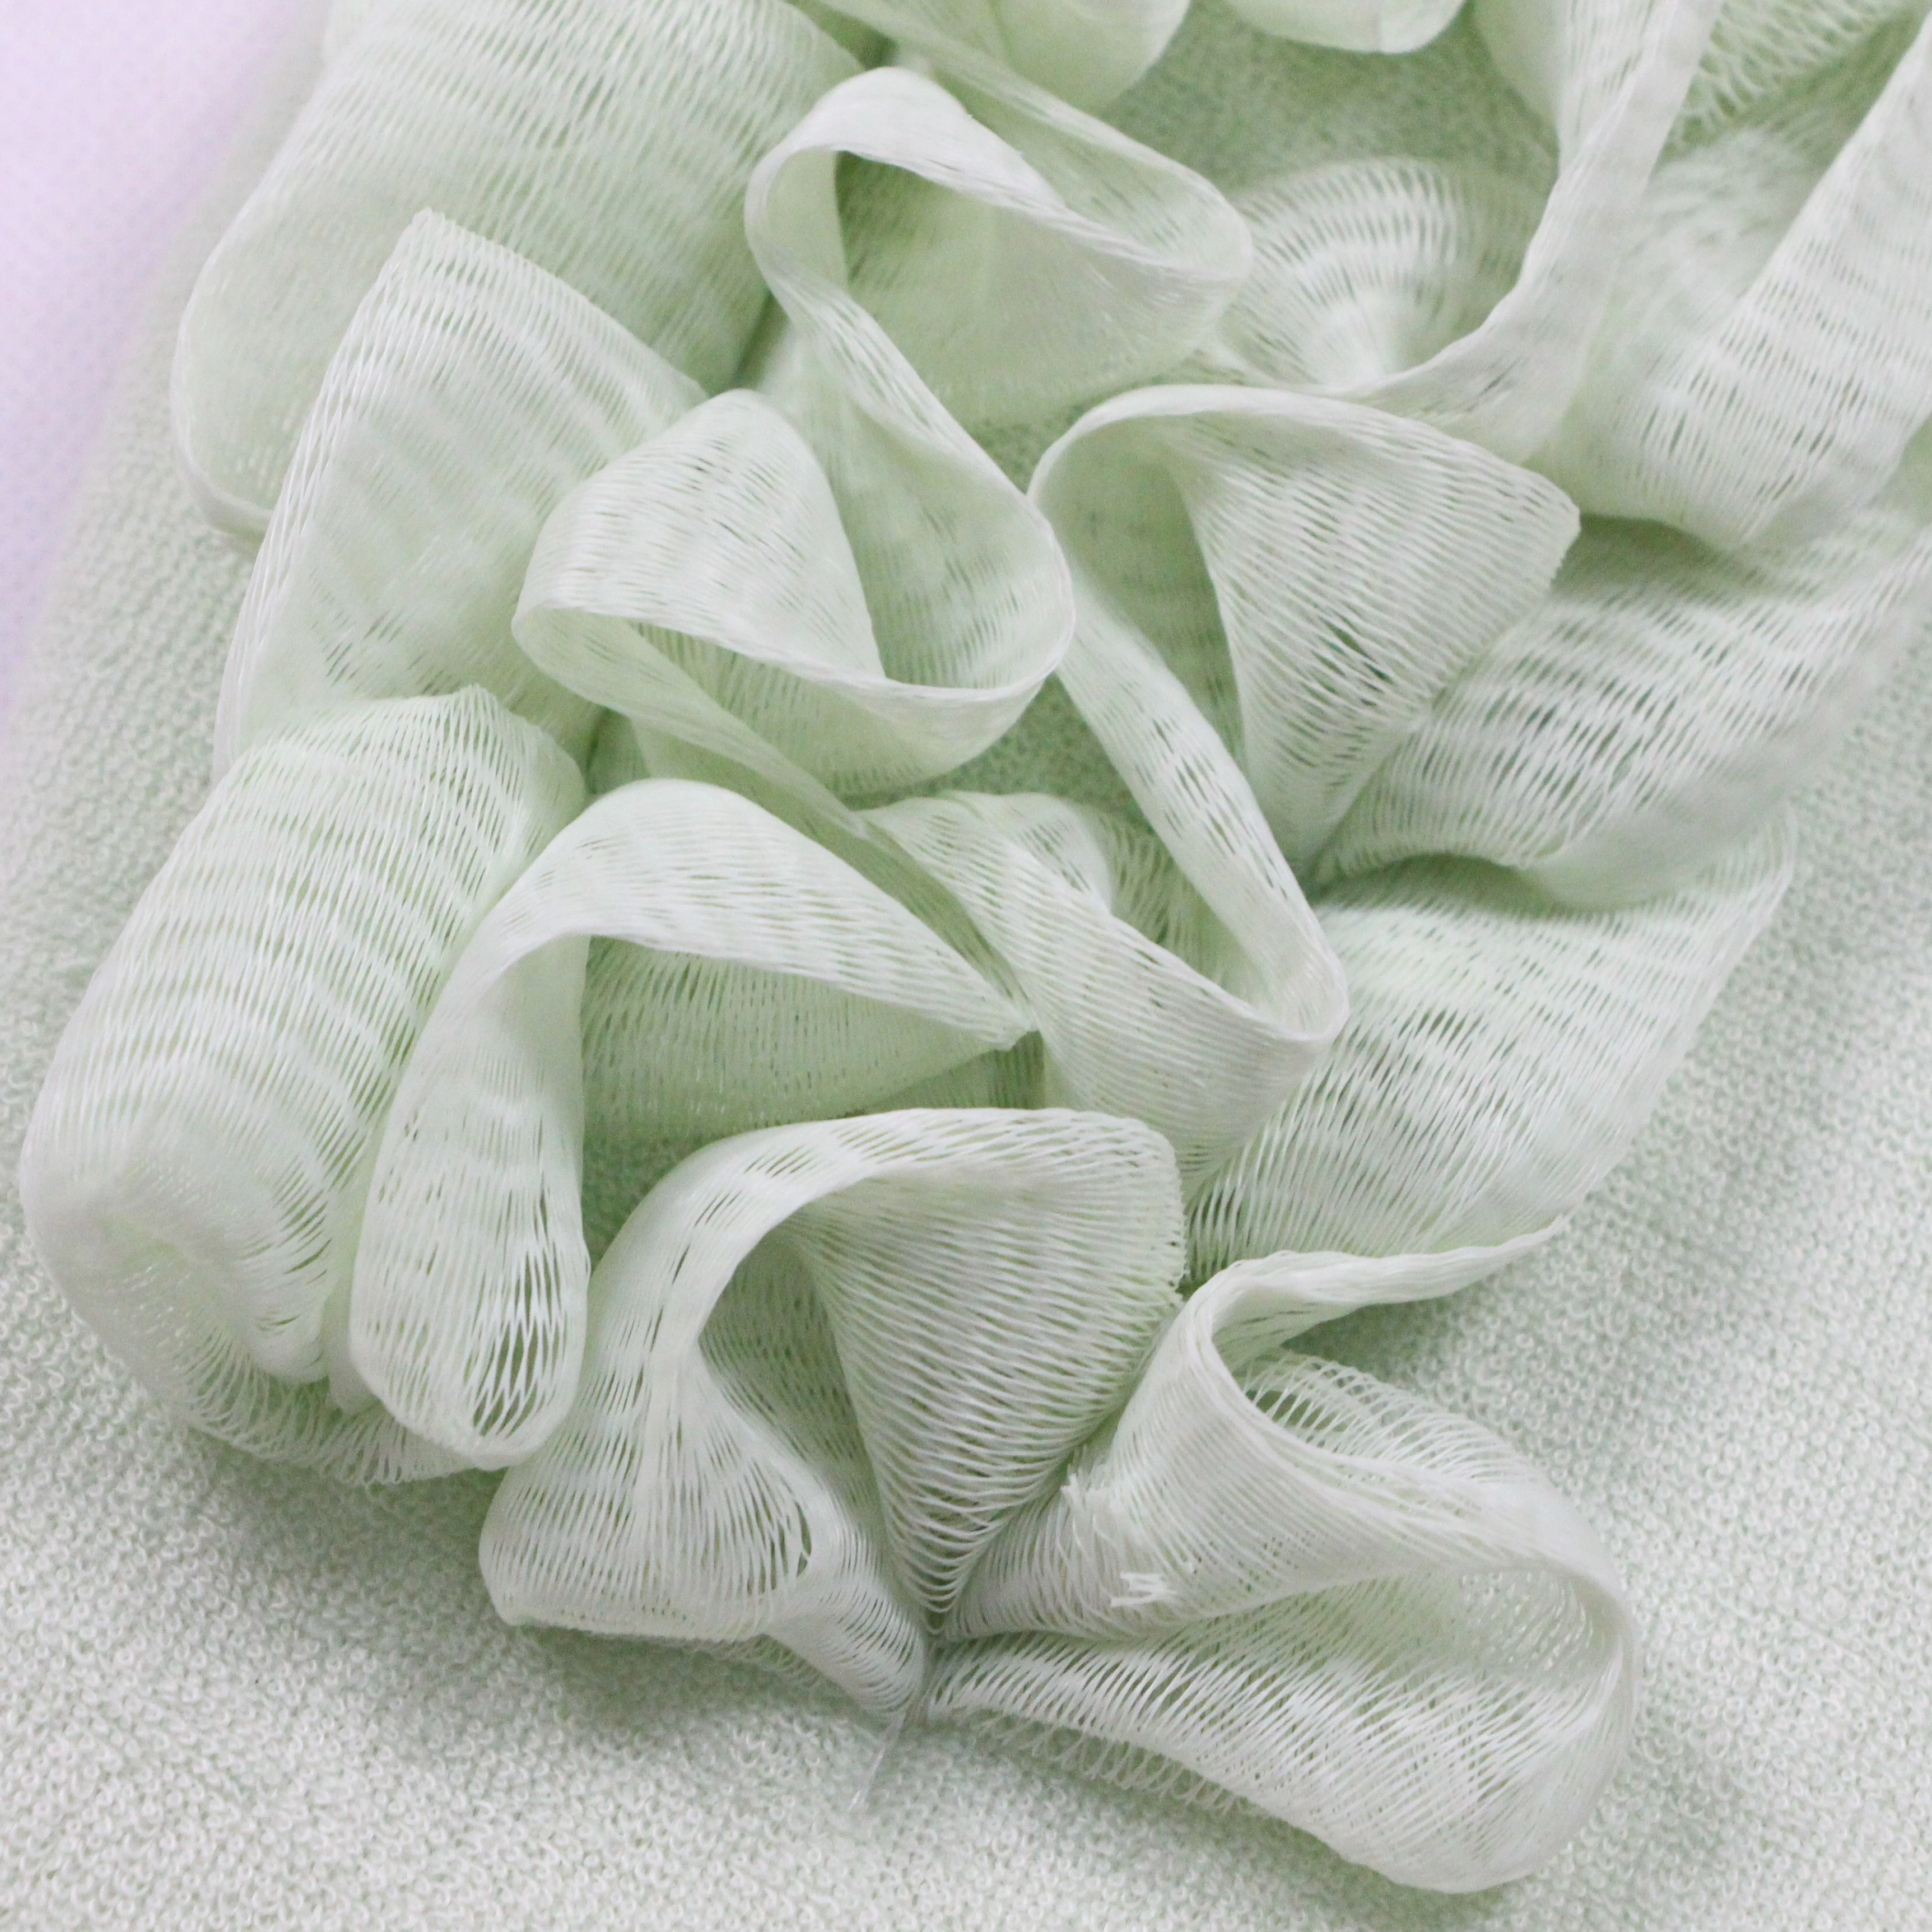 Customized Assorted Colors Natural Loofah Exfoliating Kessa Glove Bath Sponge Bath Scrub Exfoliation Body Sponge